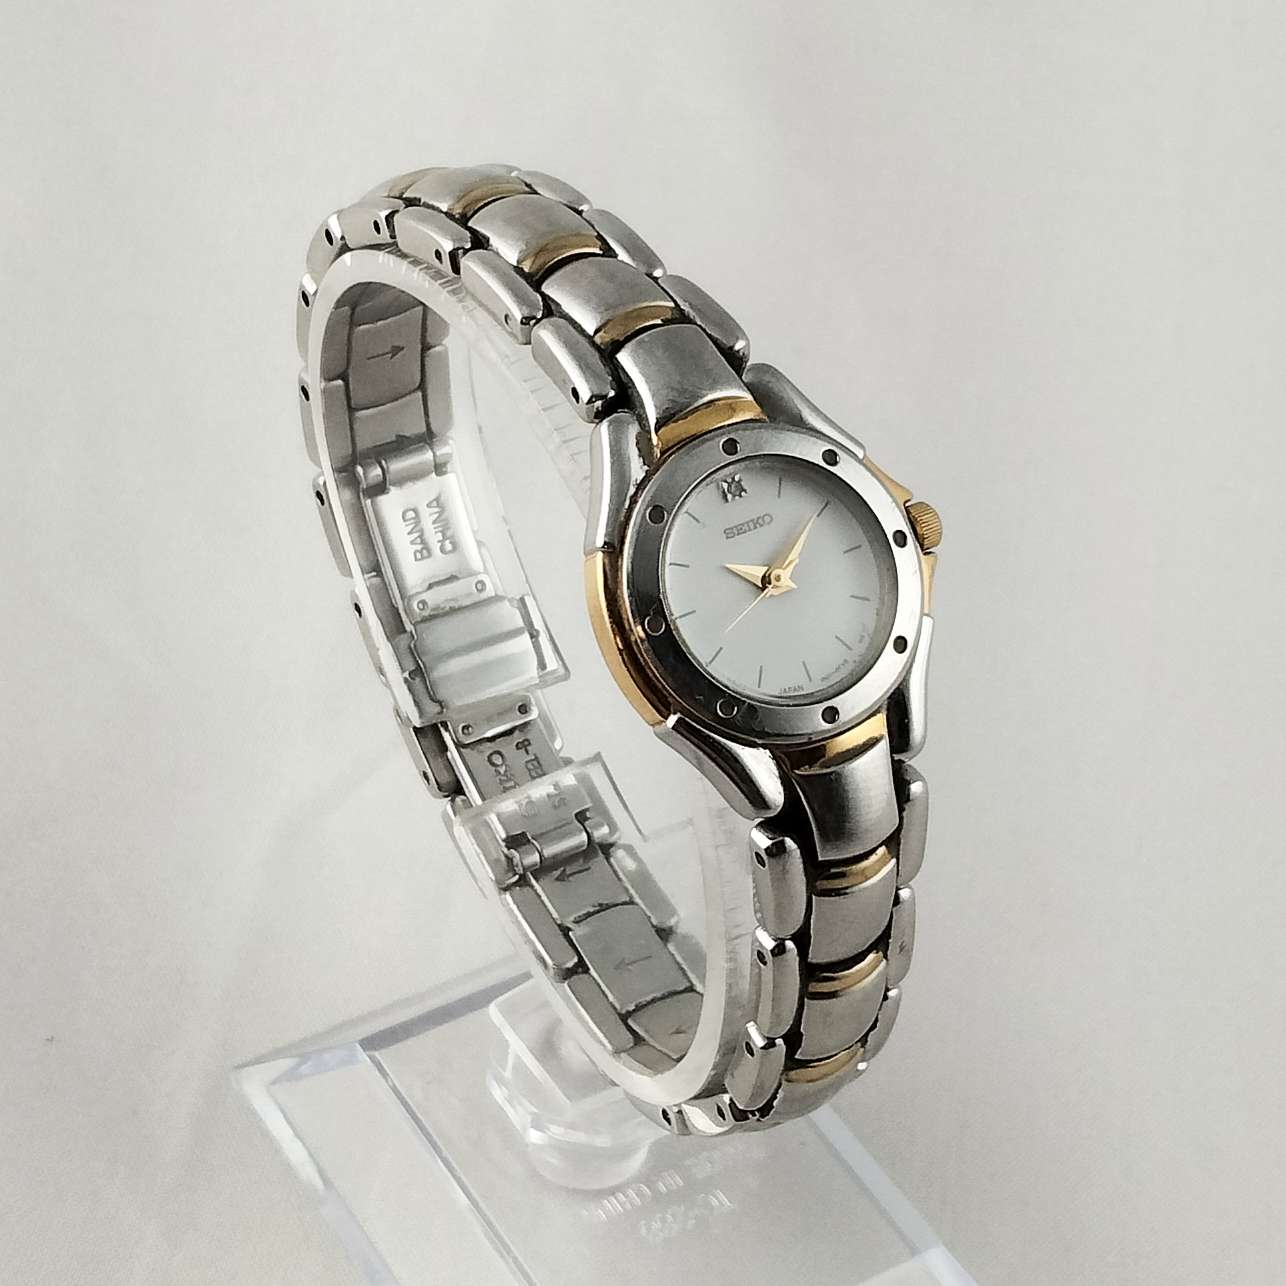 Seiko Women's Watch, Silver and Gold Tone, Bracelet Strap